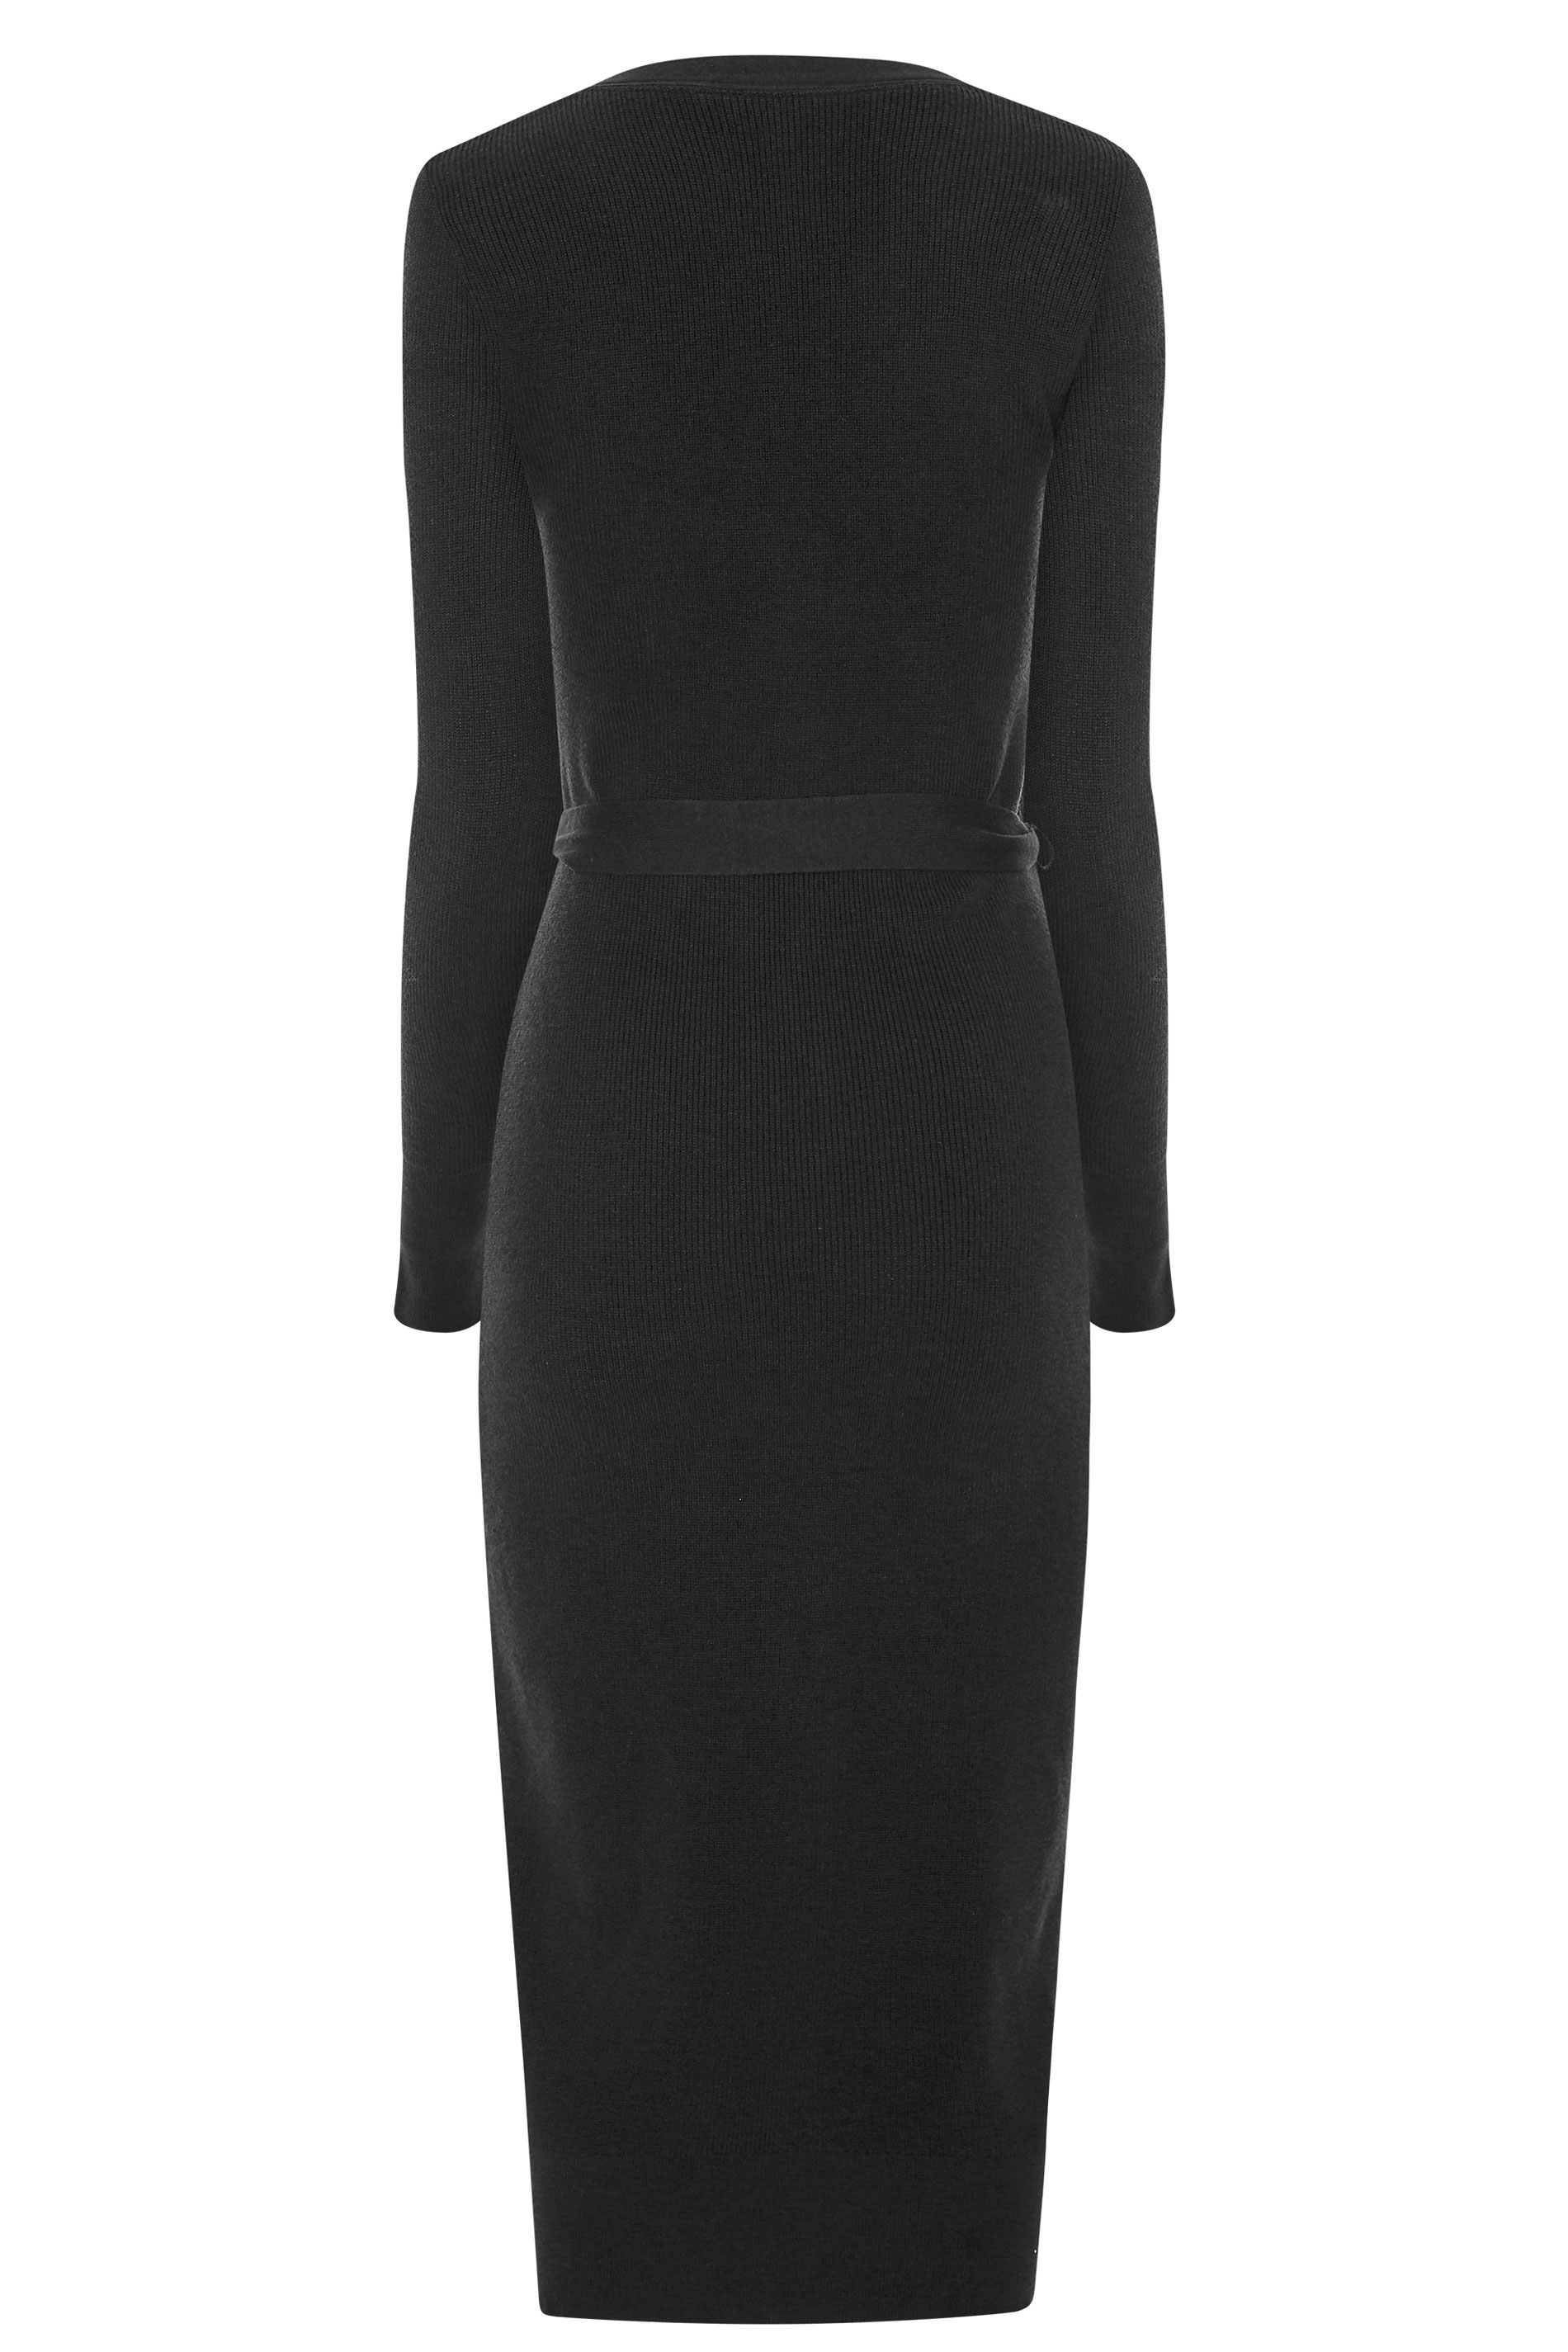 Black Button Through Knitted Cardigan Dress | Long Tall Sally